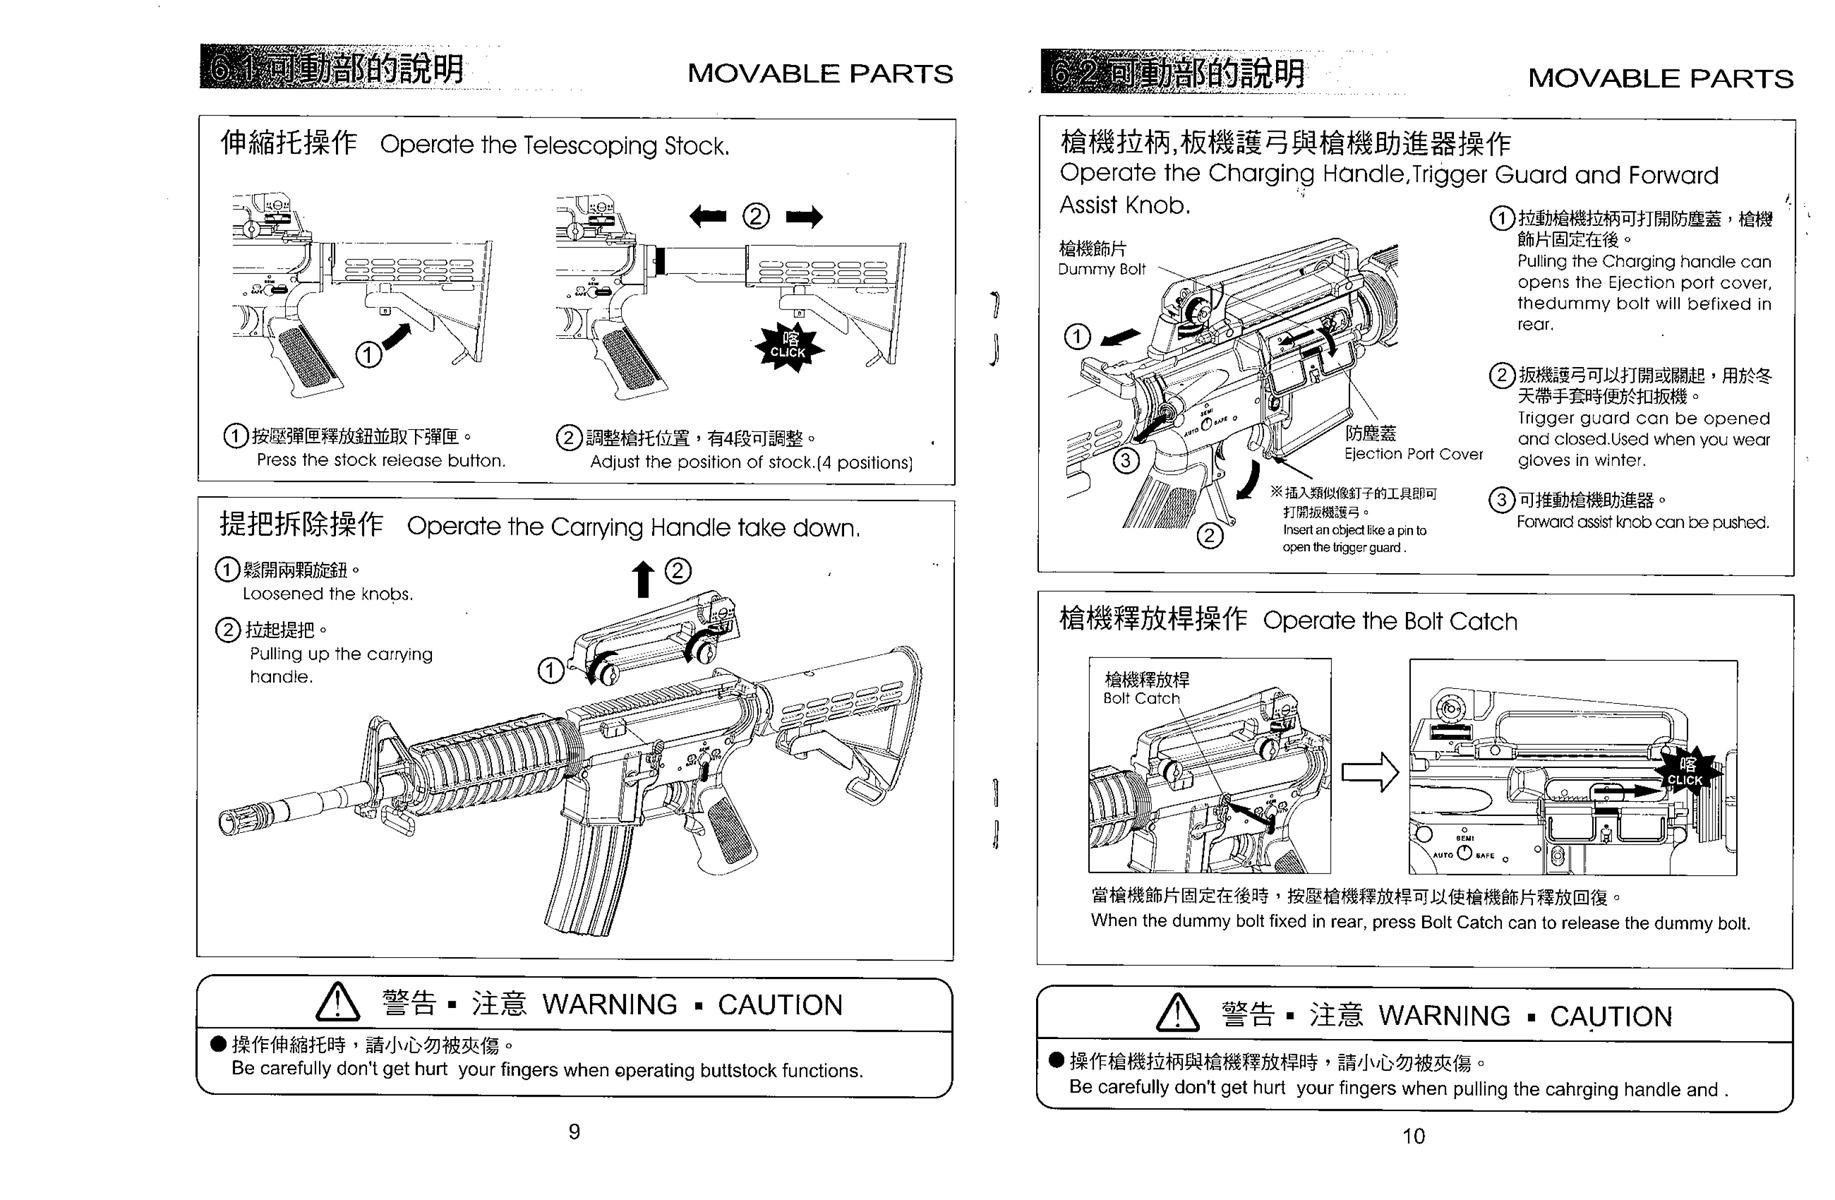 Free Download Manual For We M4 Aeg Instruction User Manual More Freebies Manuals Gun Manuals Evike Com Airsoft Superstore